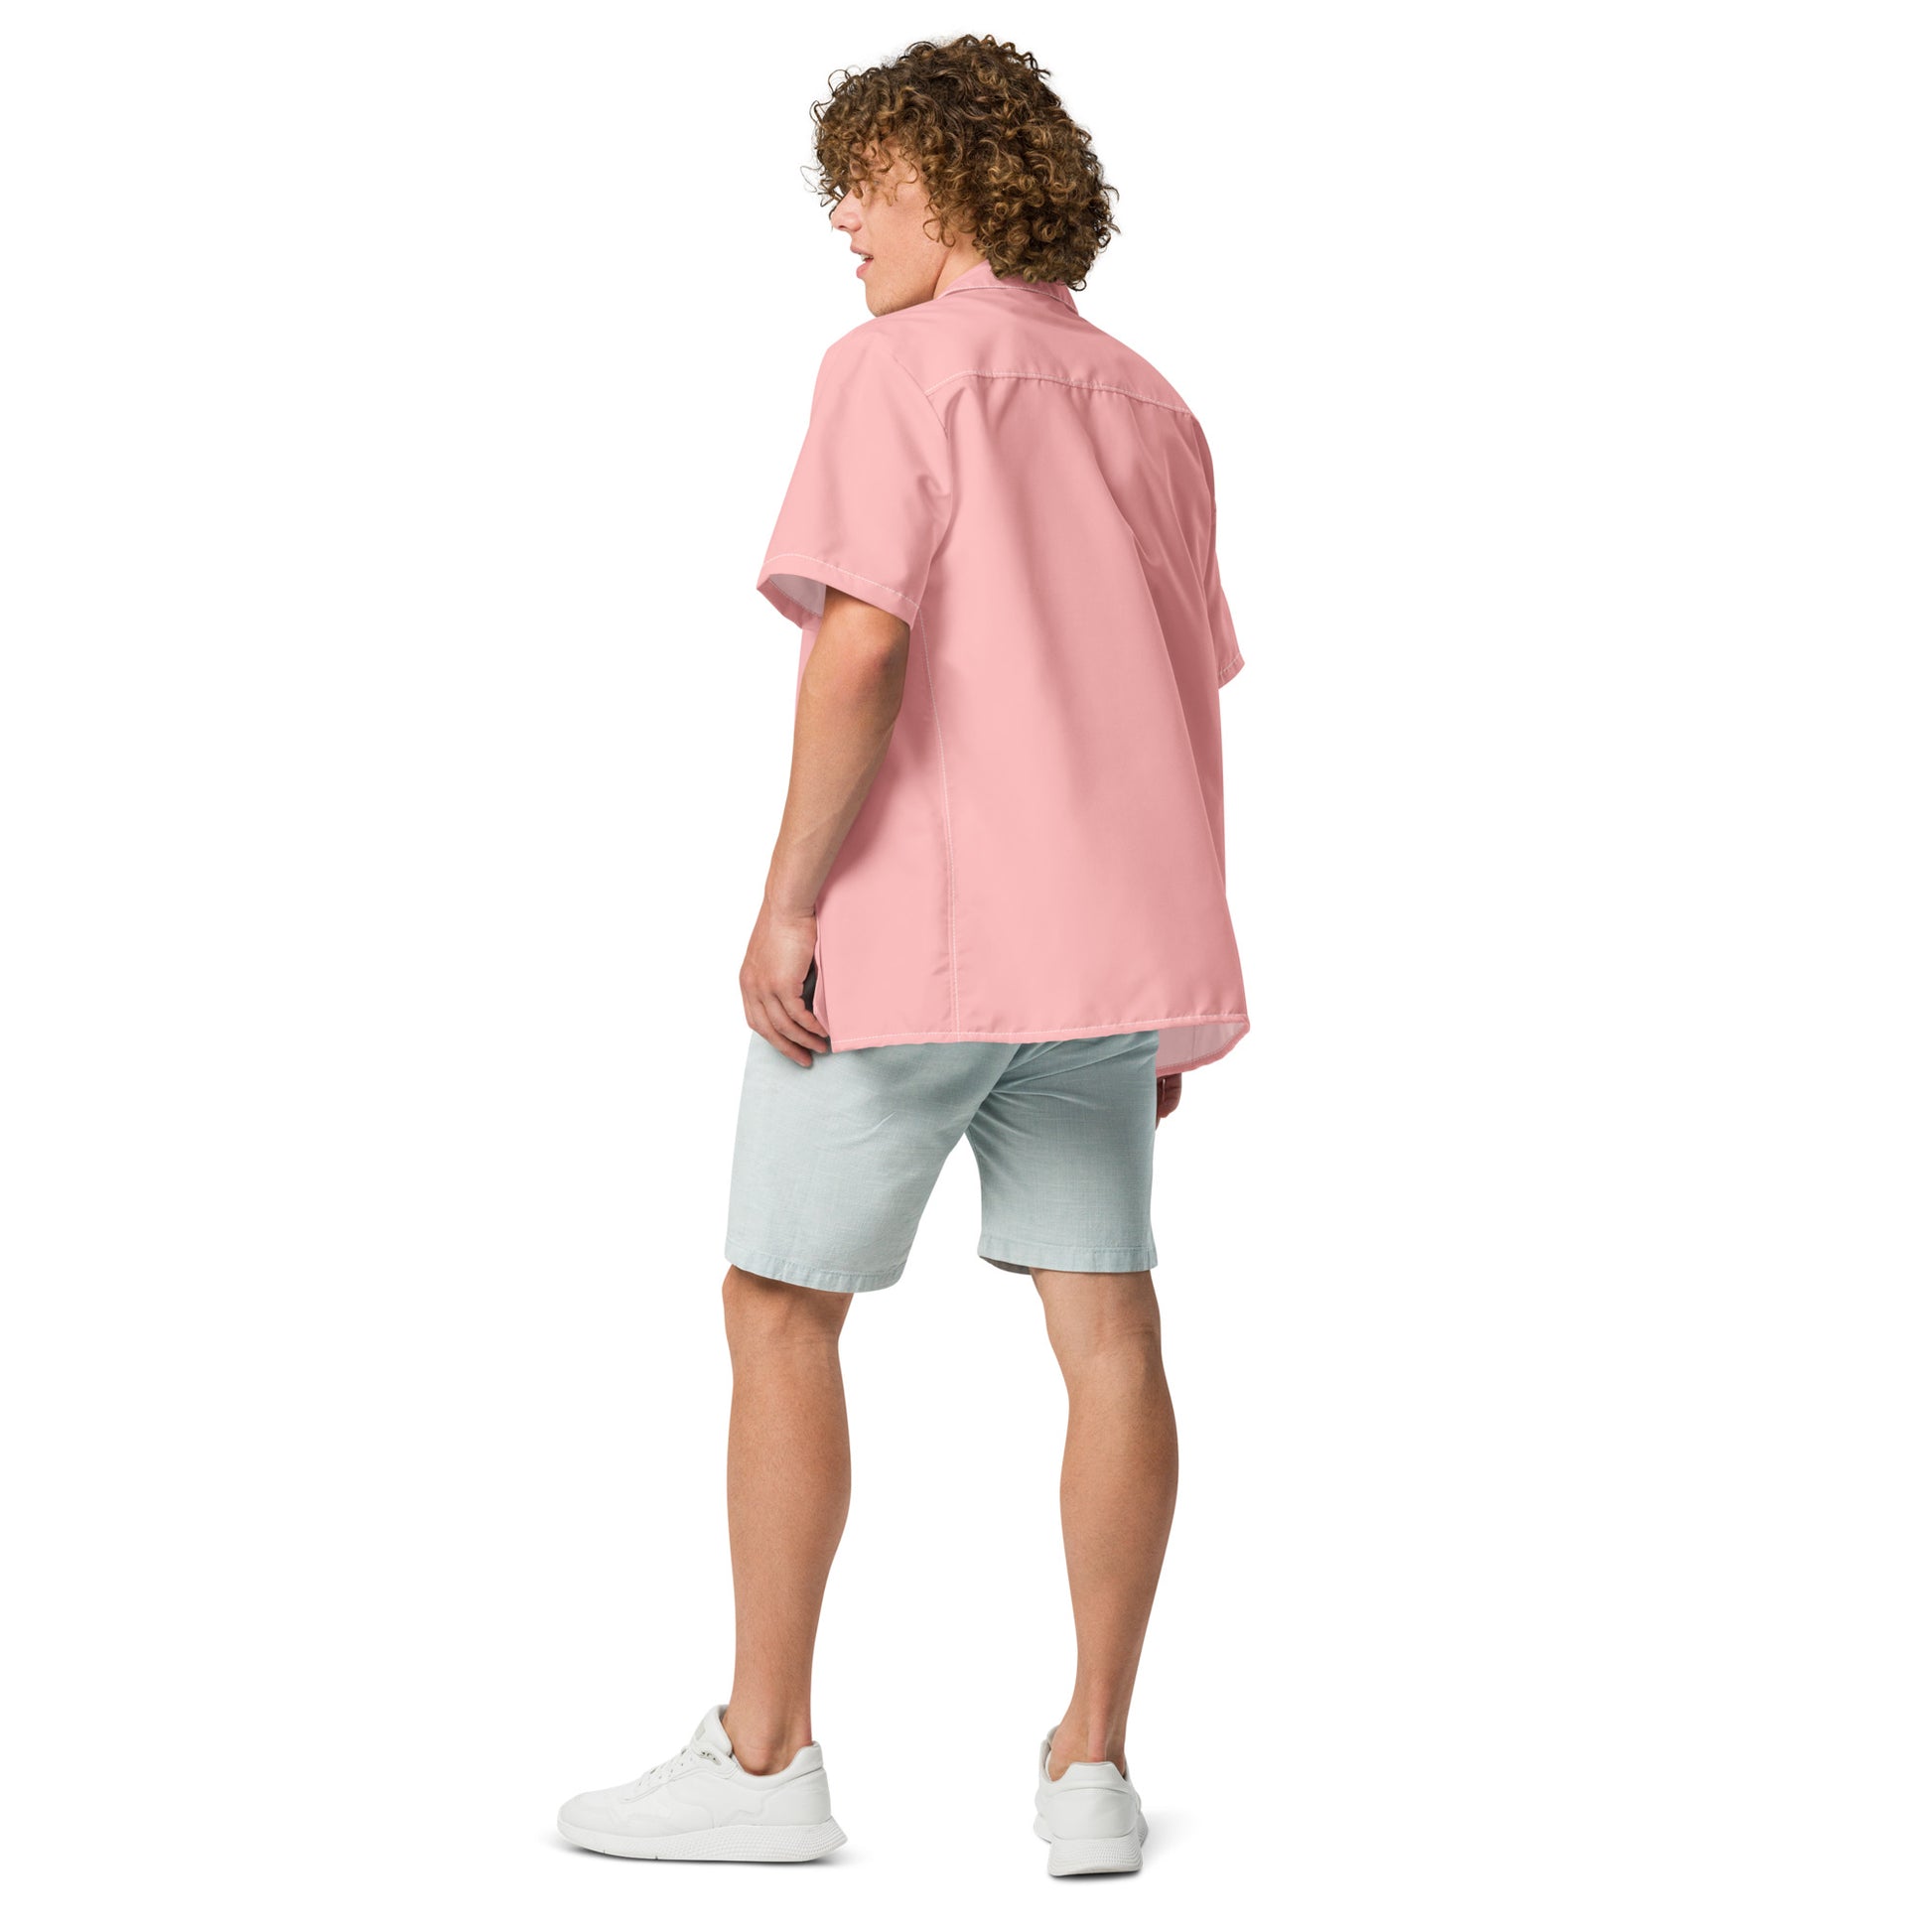 Coral button shirt - Tropical Seas Clothing 